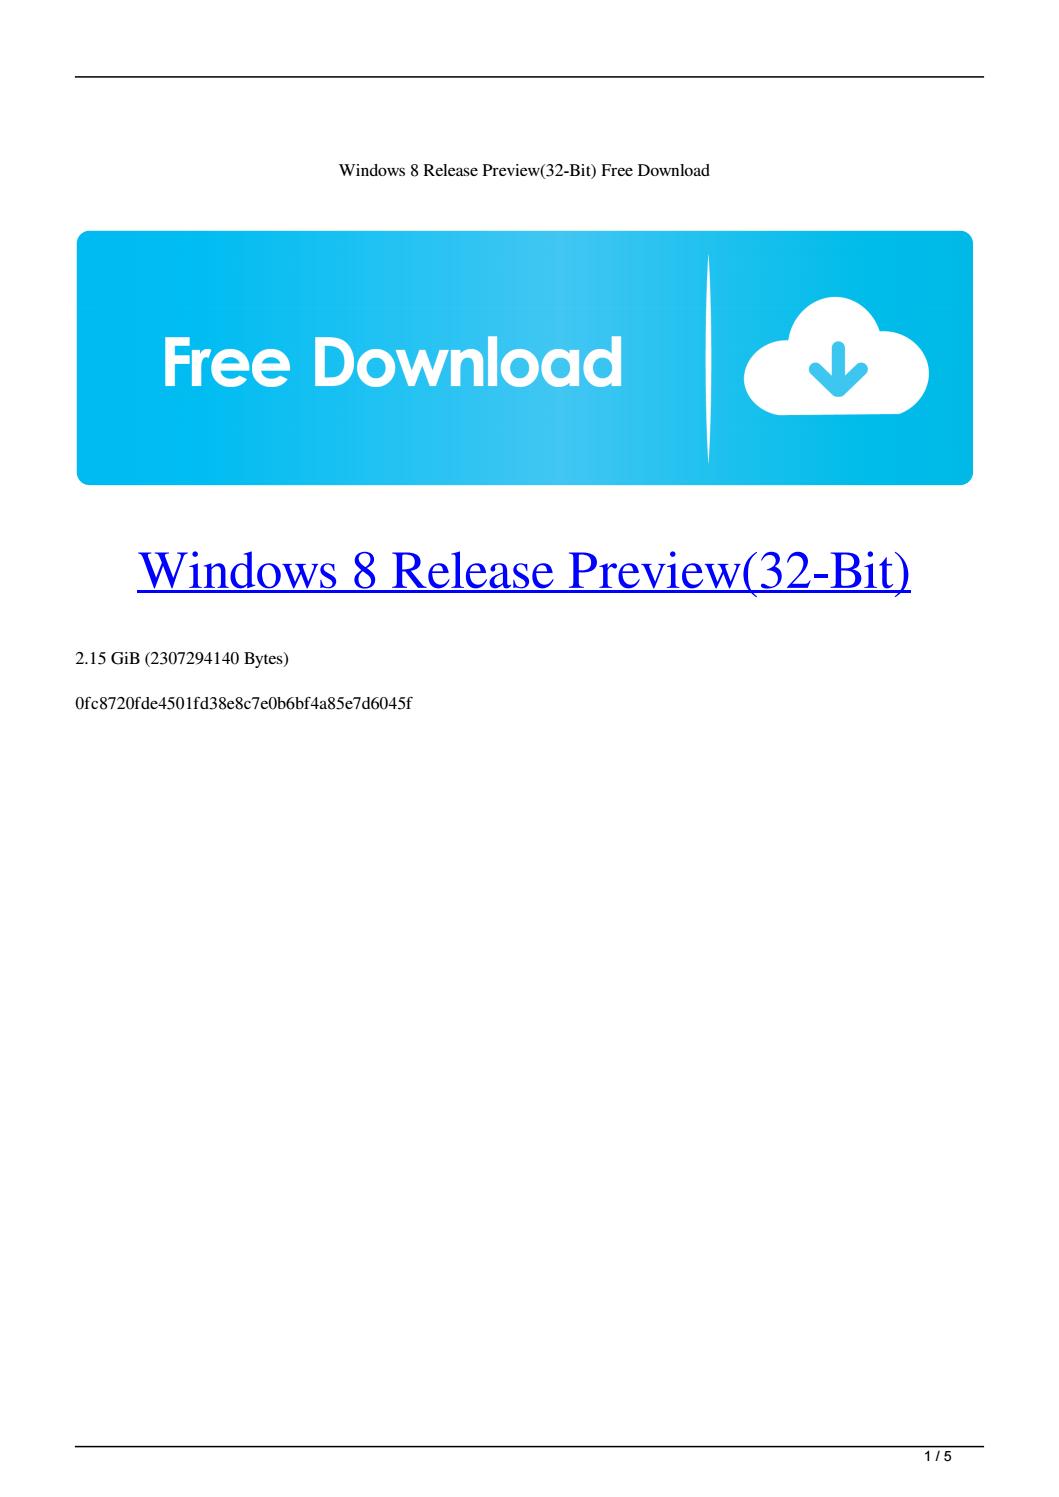 32 bit windows 8.1 free download